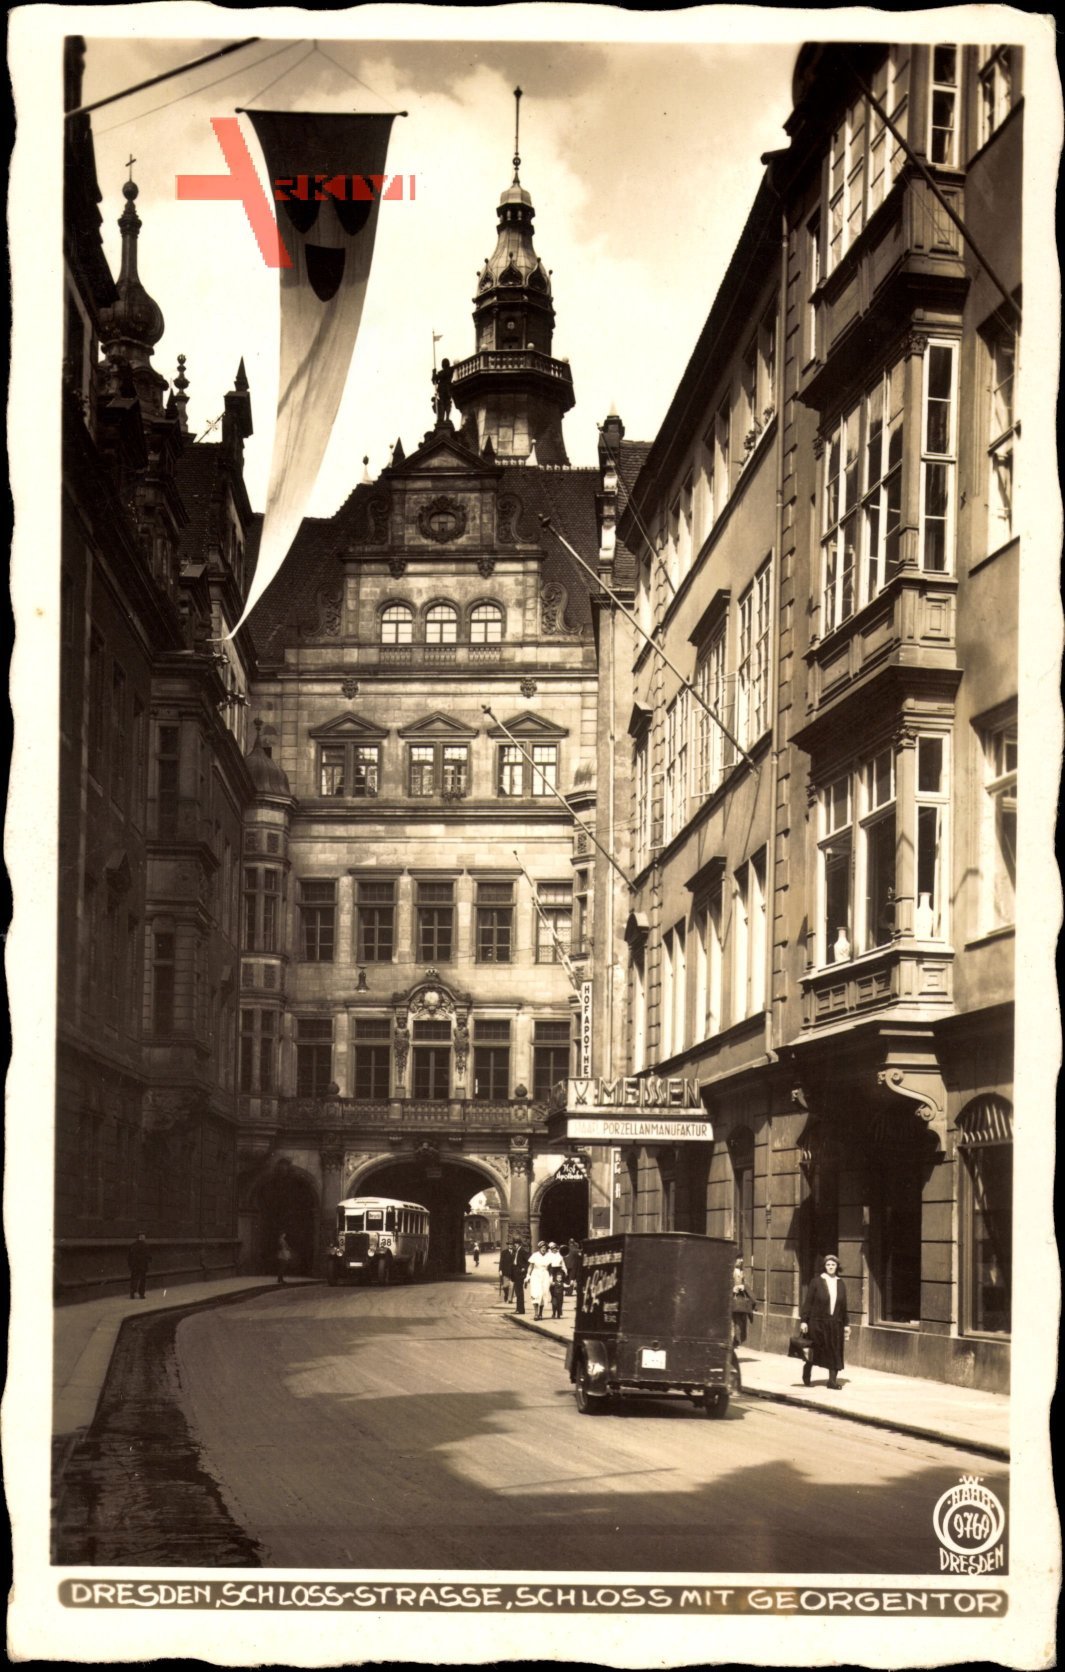 Dresden, Schloss Straße, Schloss mit Georgentor, Walter Hahn 9769